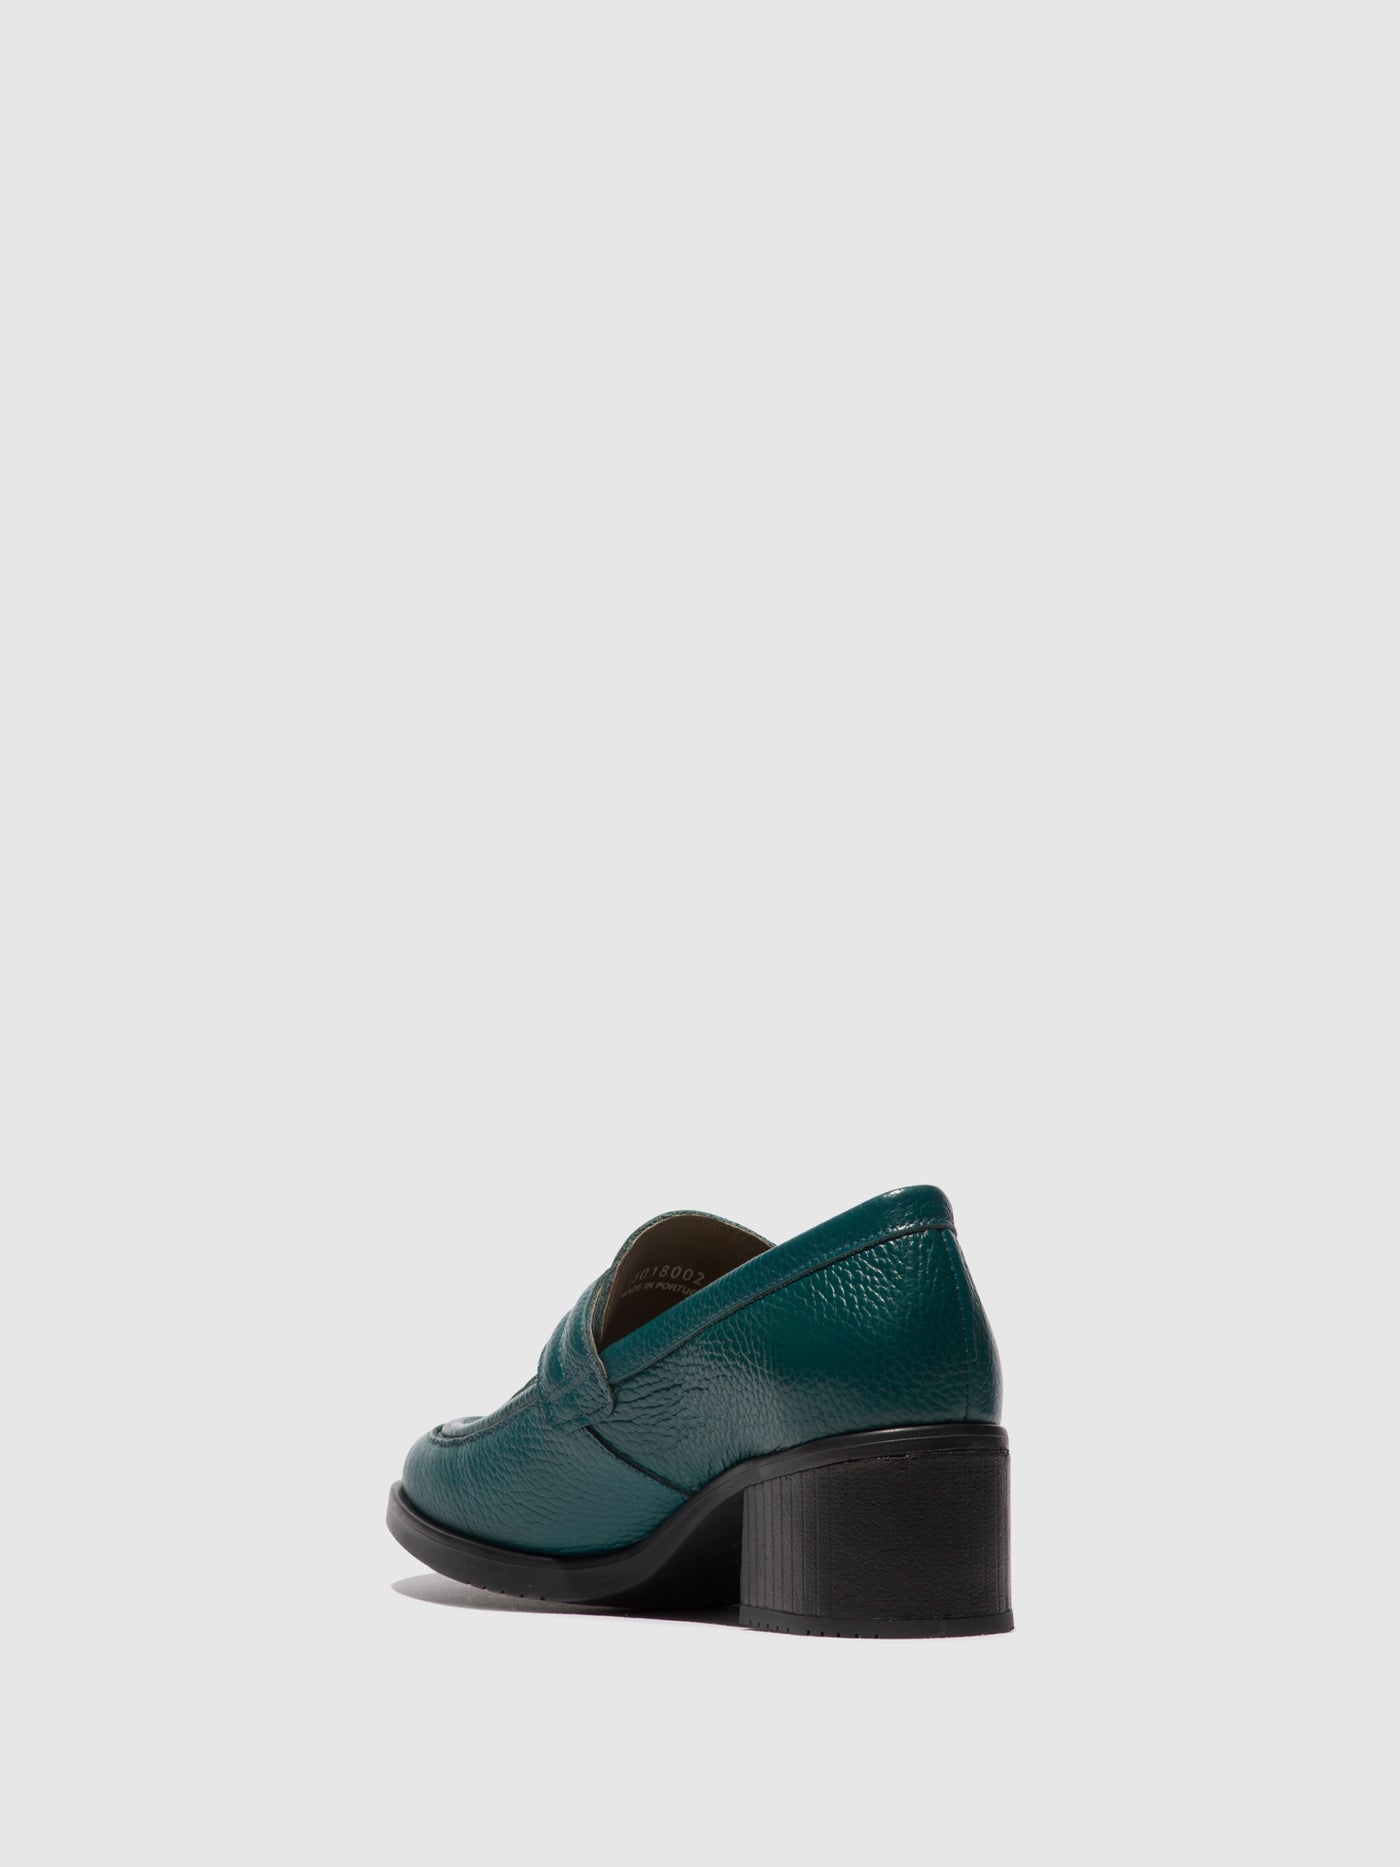 Loafers Shoes KOLA018FLY TEAL